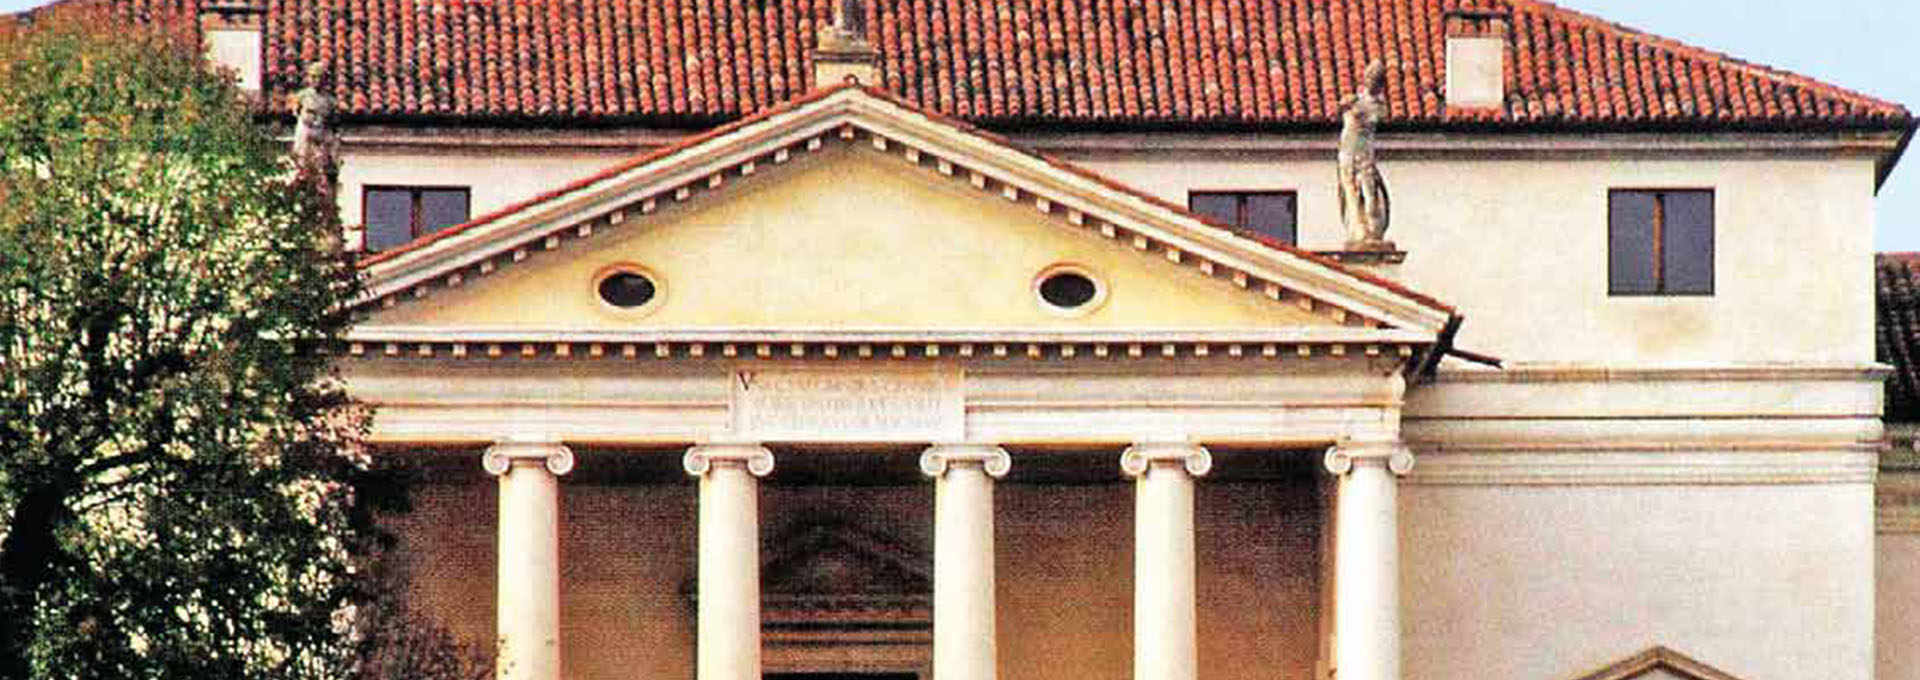 Villa Capra «La Rotonda» by Andrea Palladio